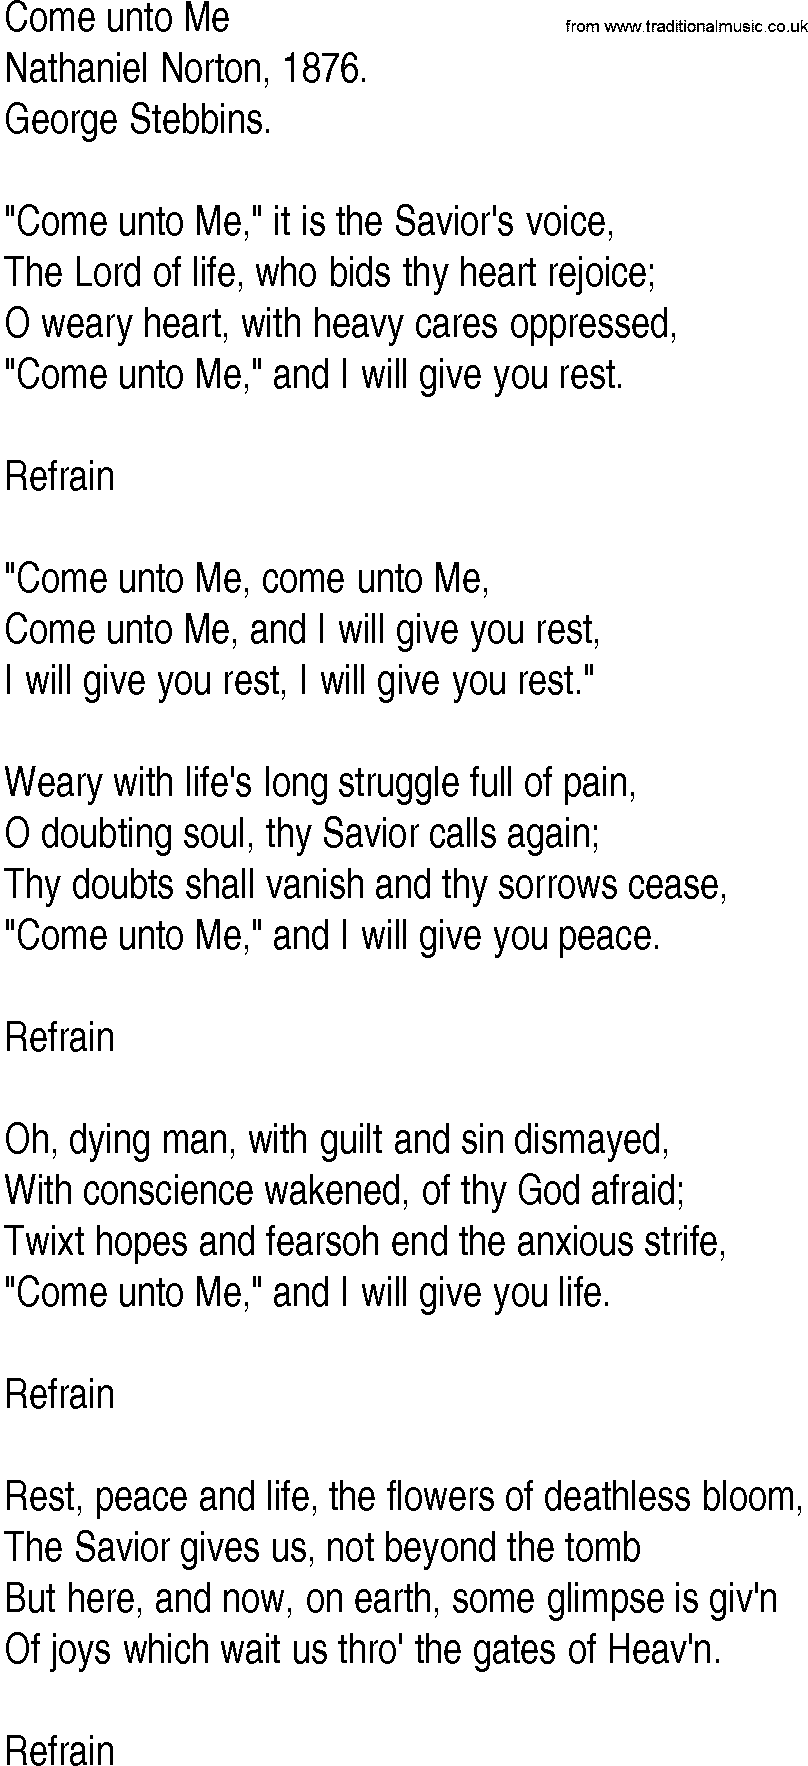 Hymn and Gospel Song: Come unto Me by Nathaniel Norton lyrics